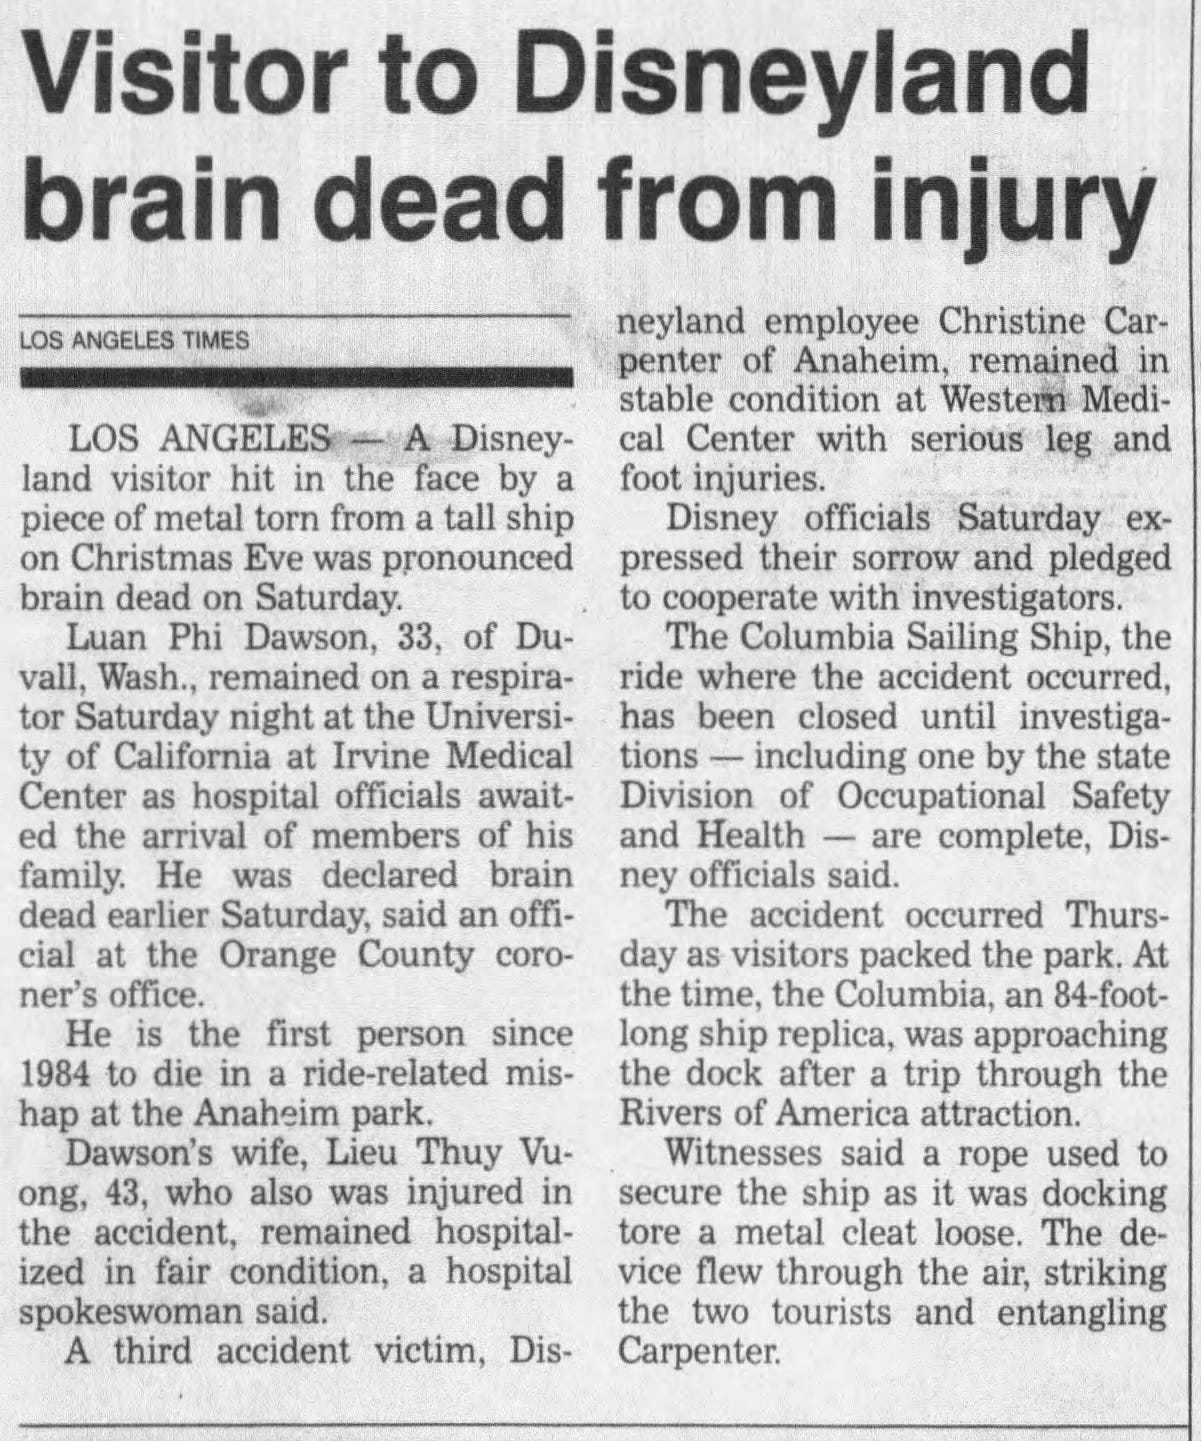 Visitor to Disneyland brain dead from injury